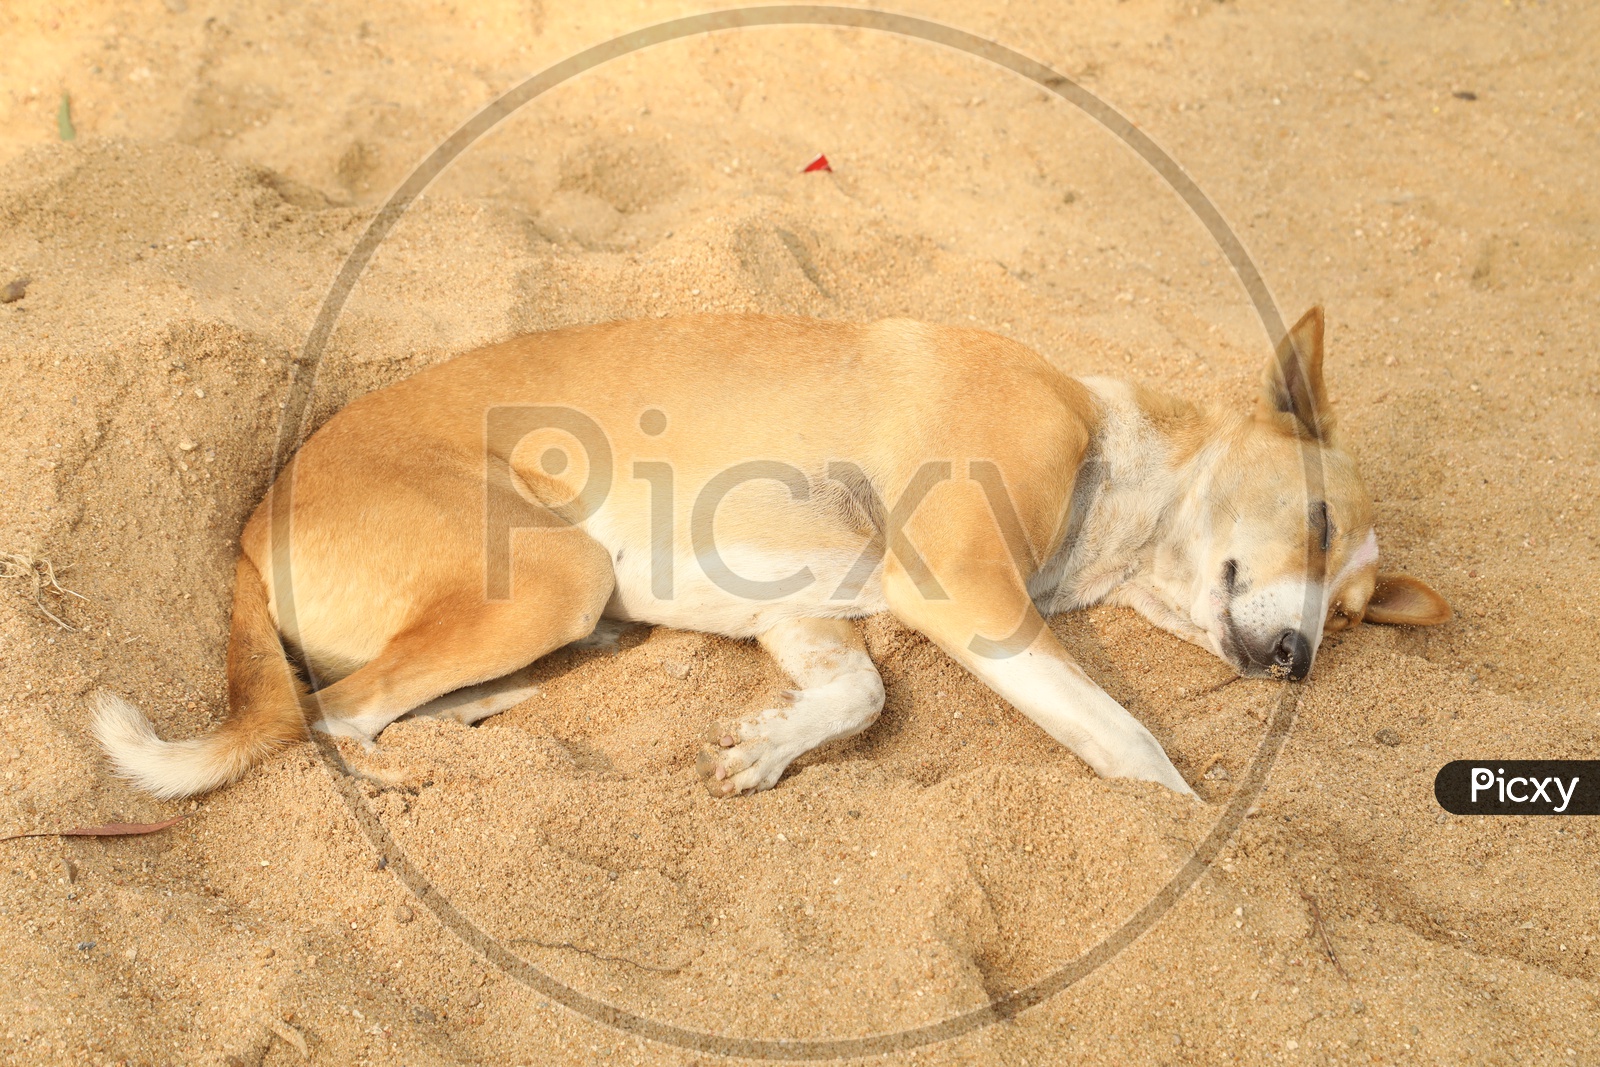 A street dog sleeping on the sand